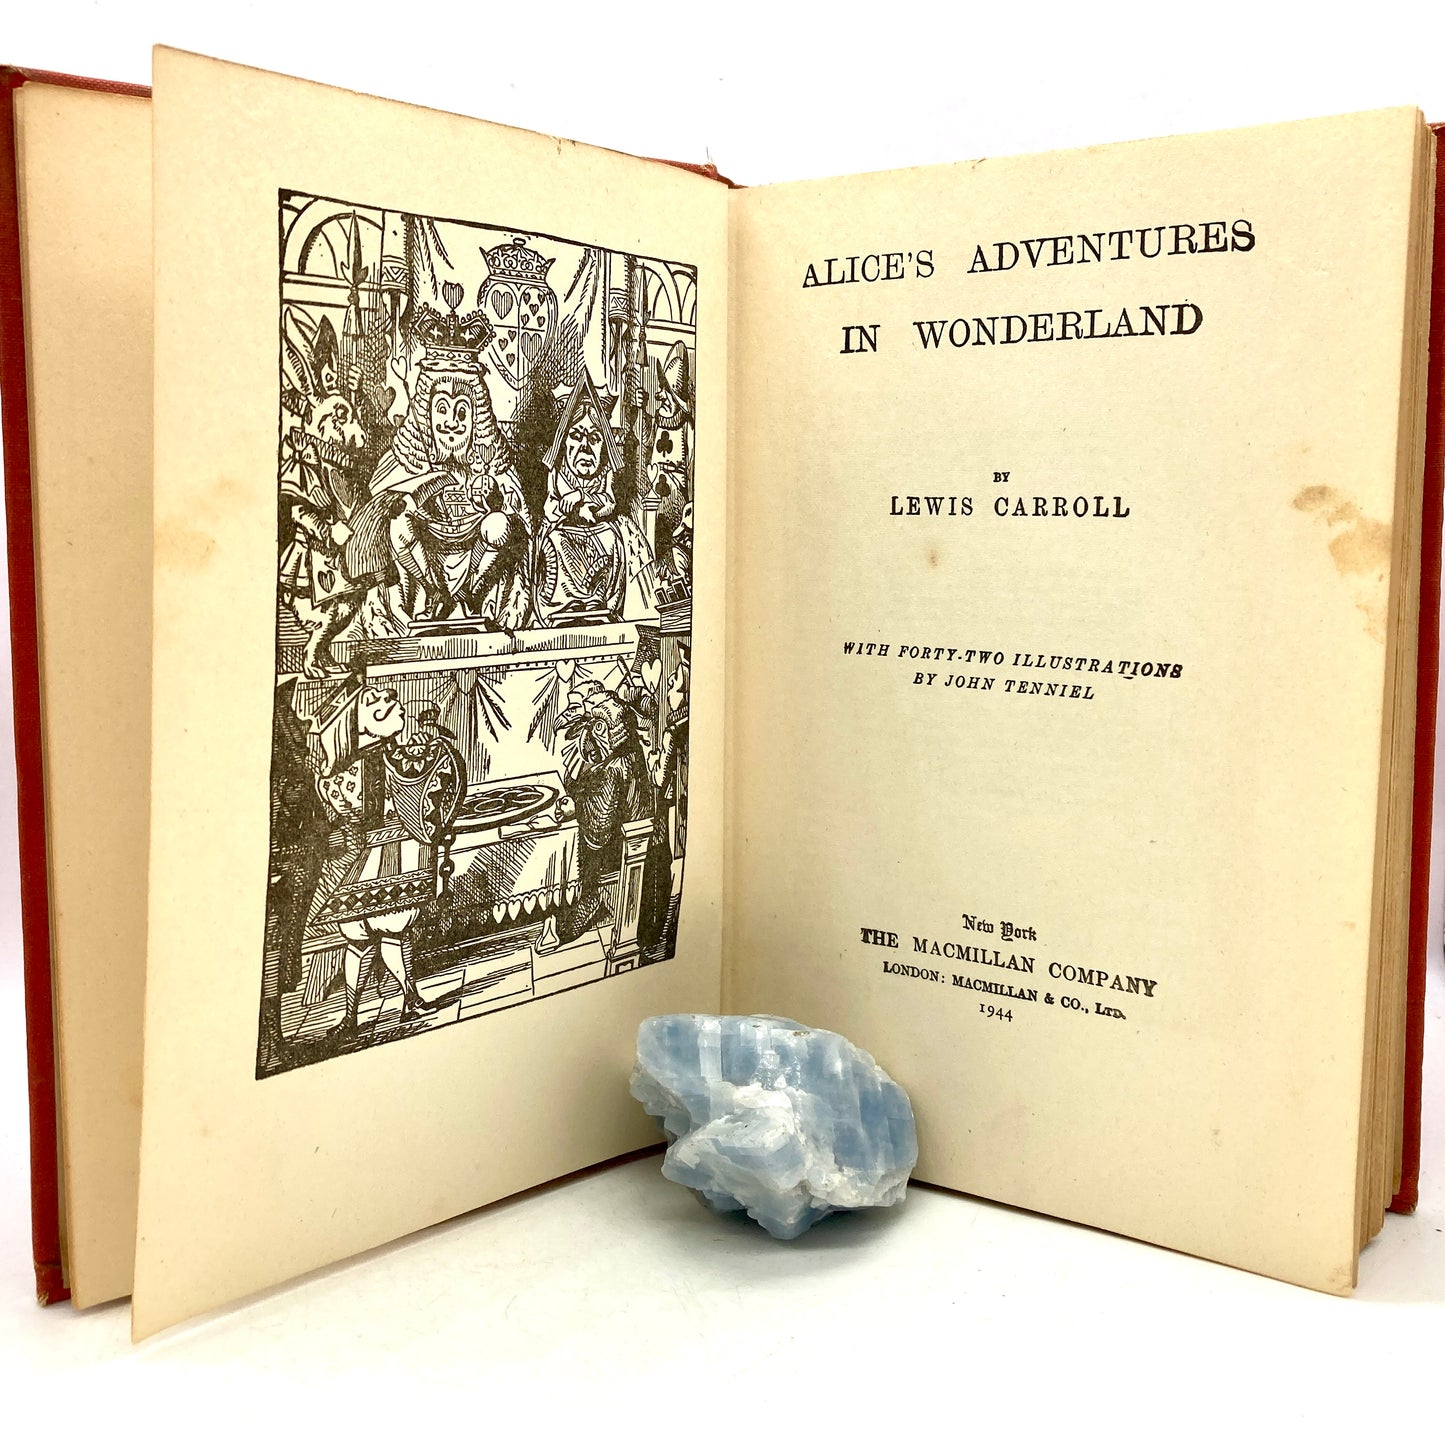 CARROLL, Lewis "Alice's Adventures in Wonderland" [Macmillan, 1944]